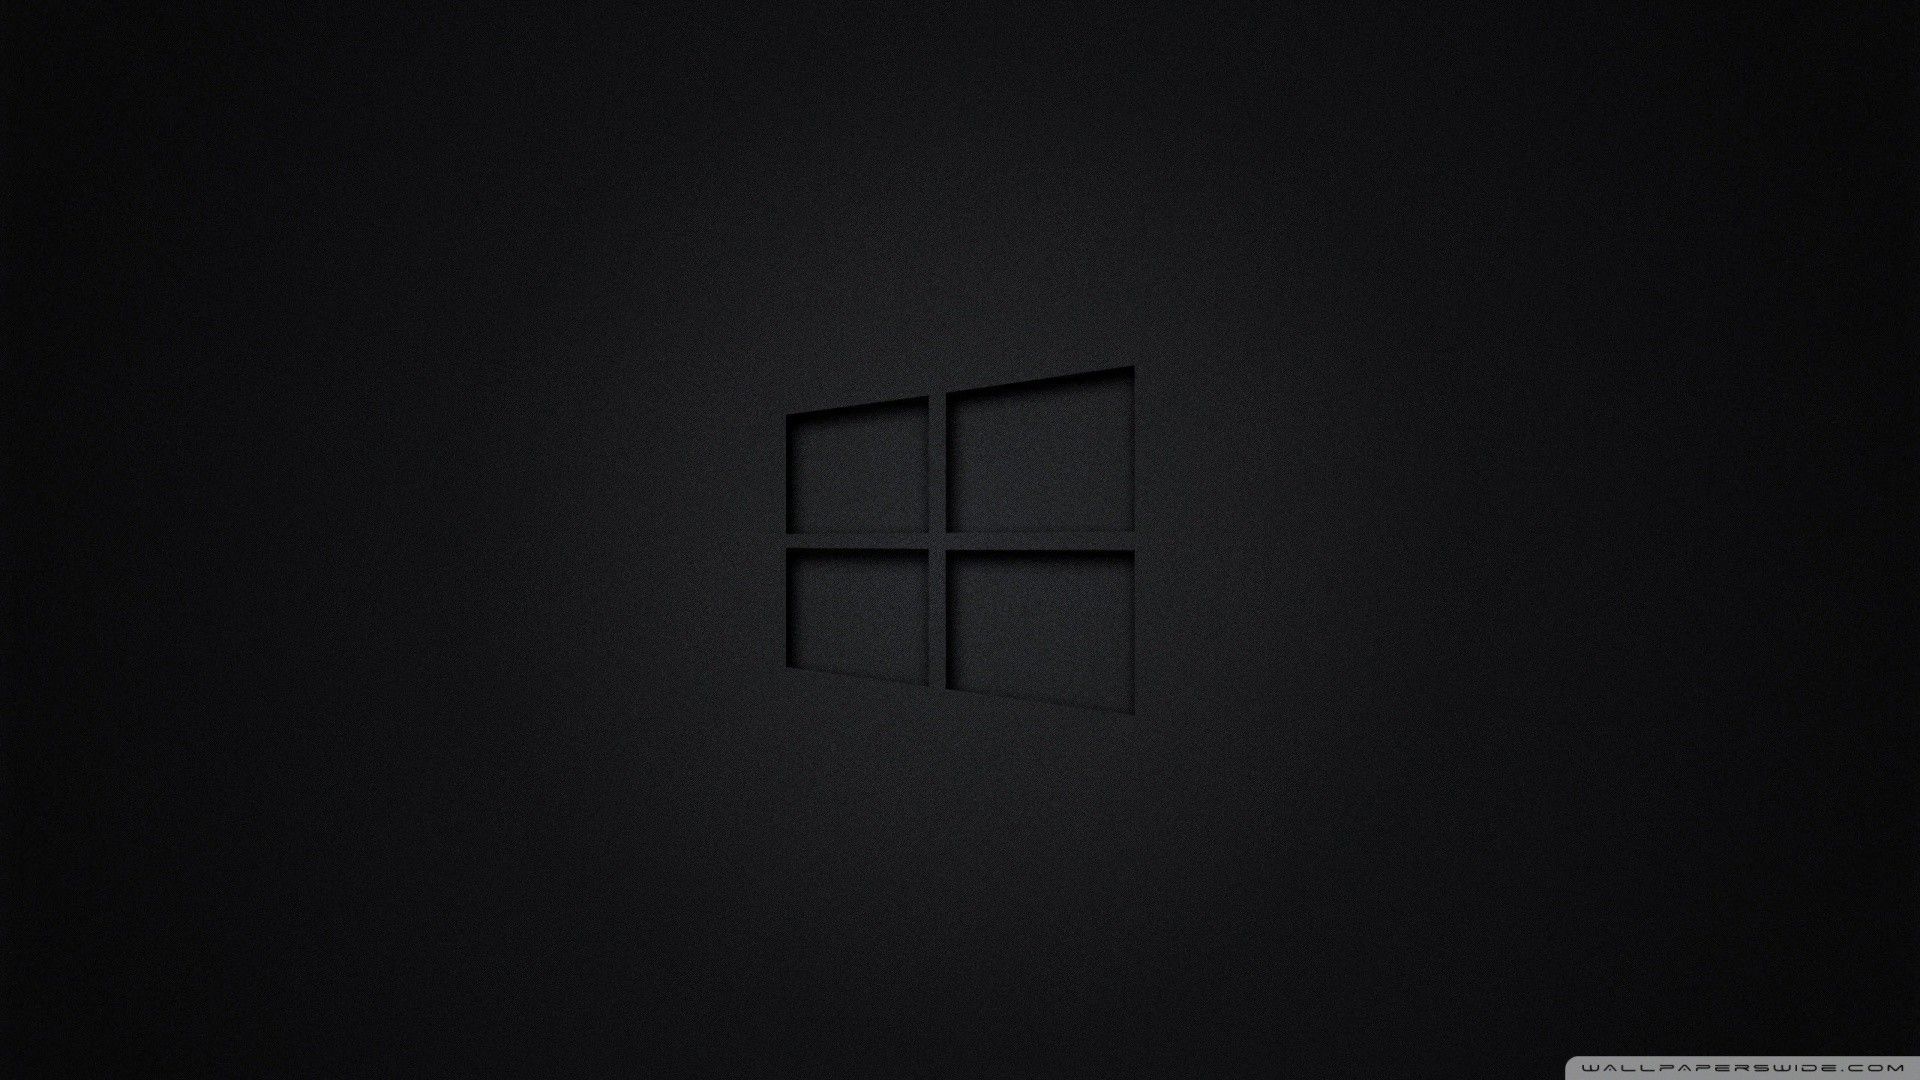 Windows 10 black background 4K wallpaper download